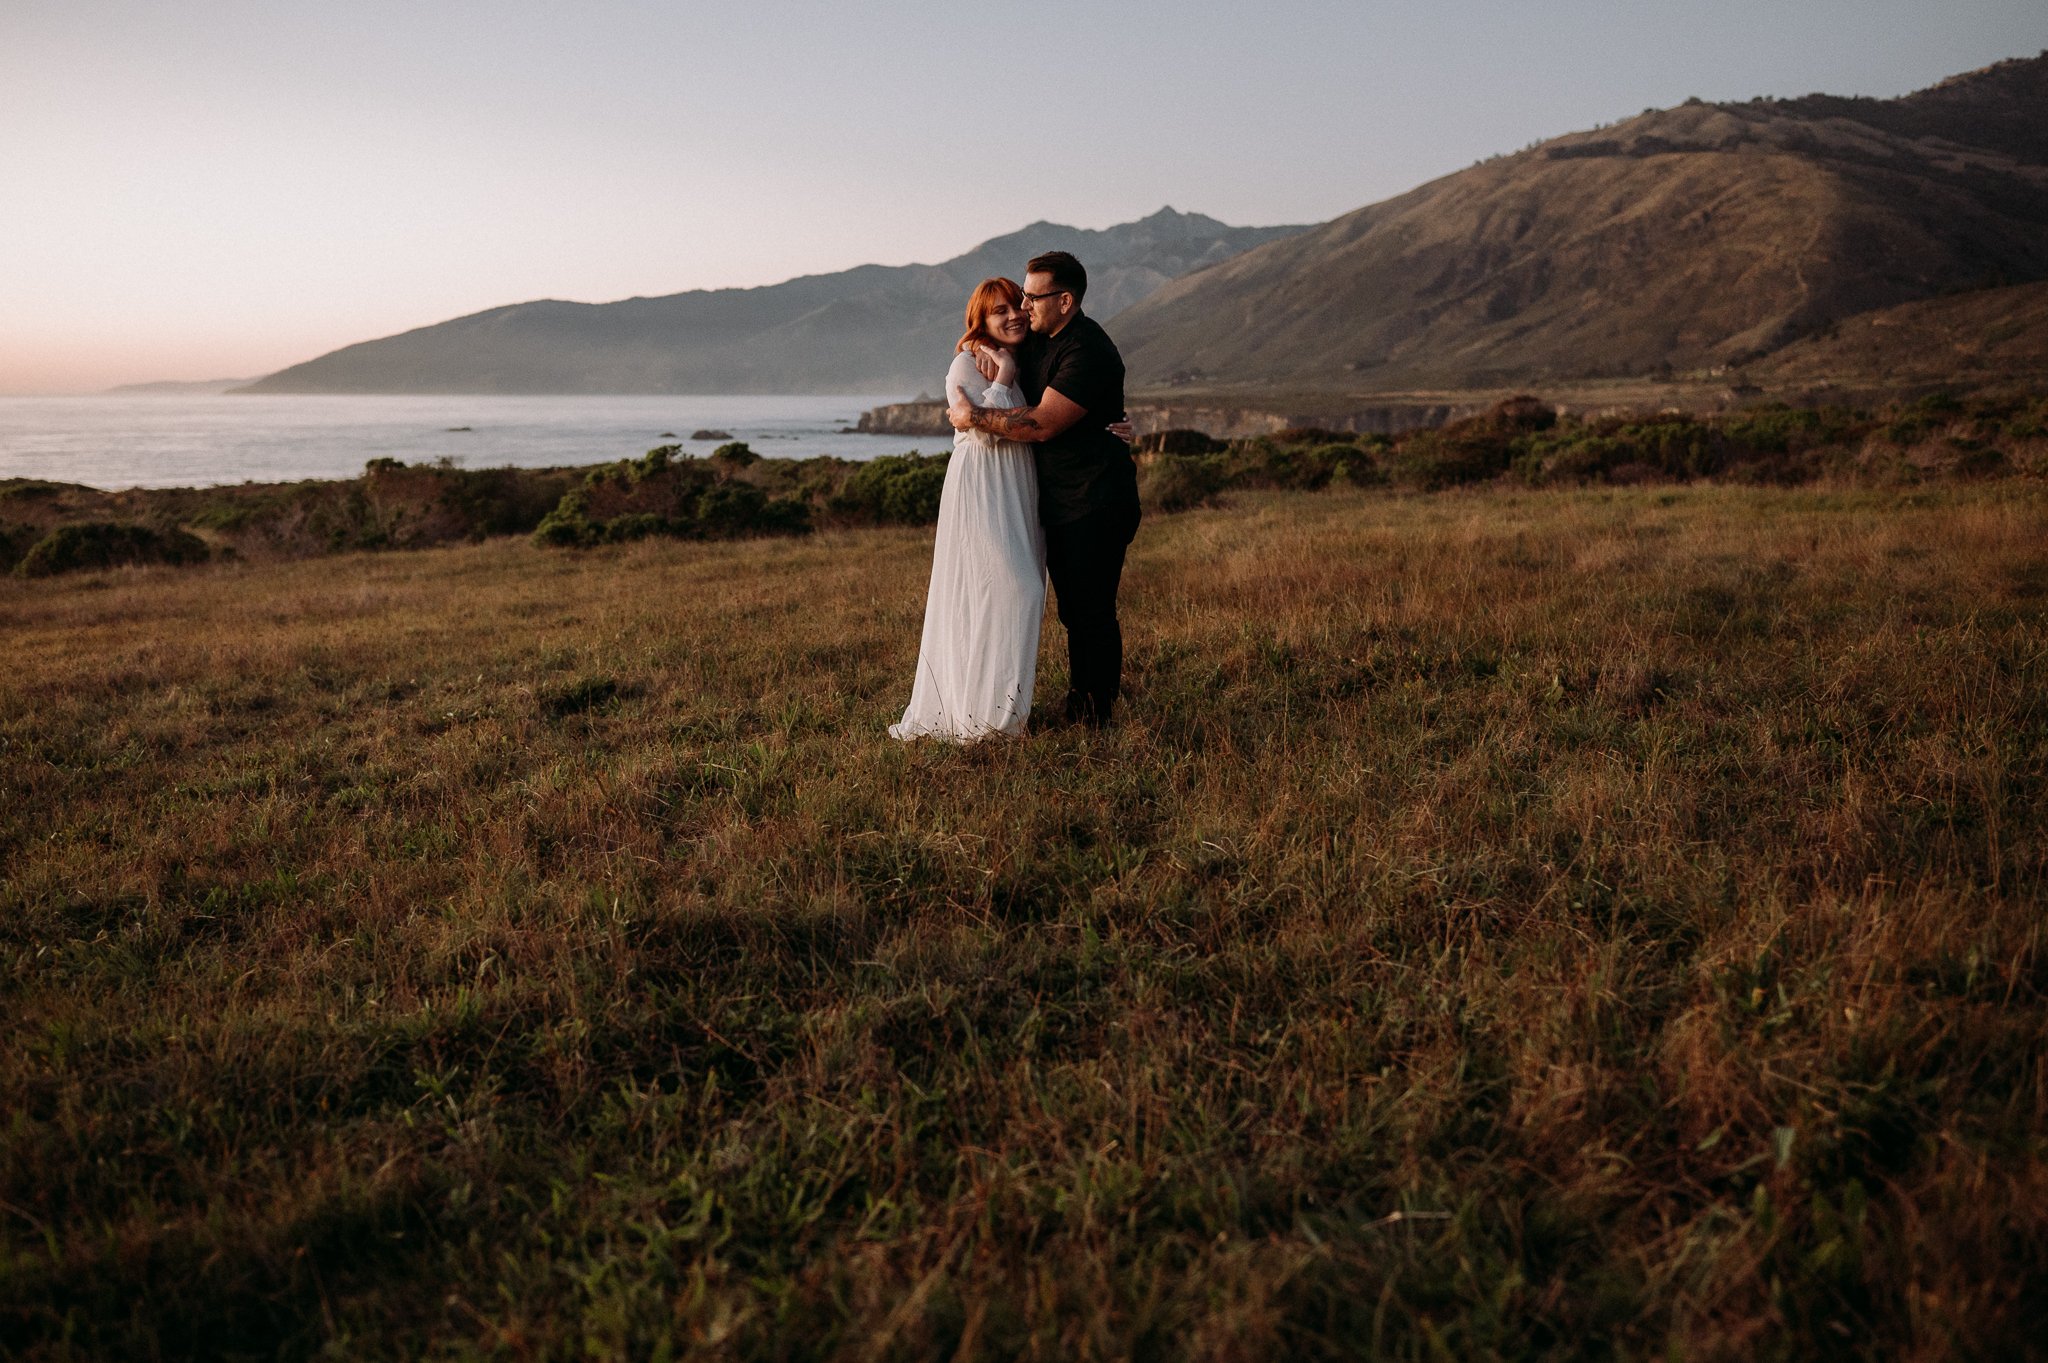 Couple-in-Meadow-Big-Sur-adventure-photography